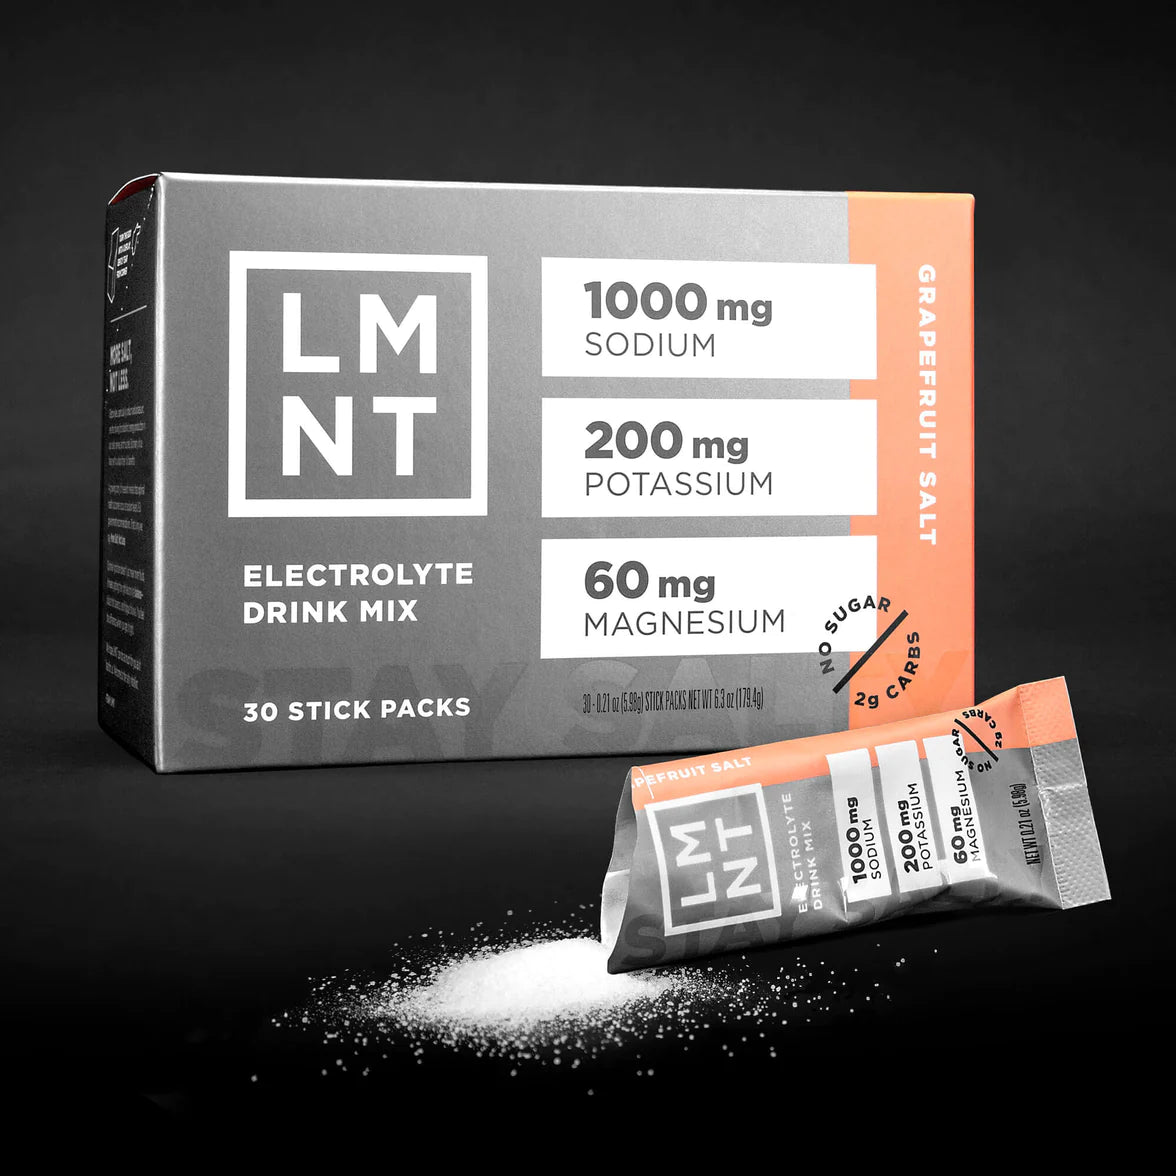 LMNT Electrolyte Salt